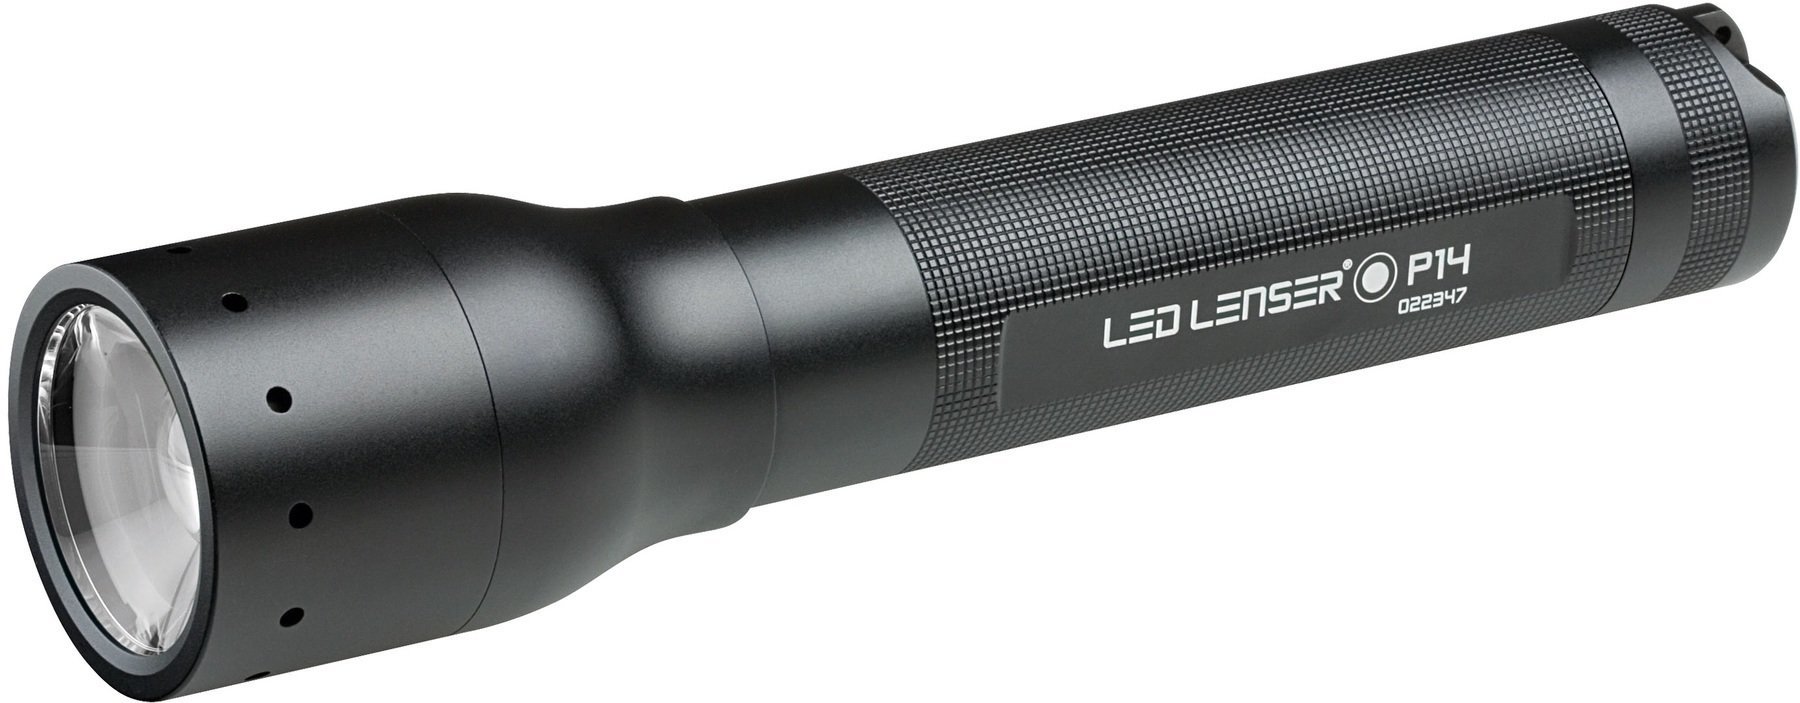 Ficklampa Led Lenser P14 Ficklampa